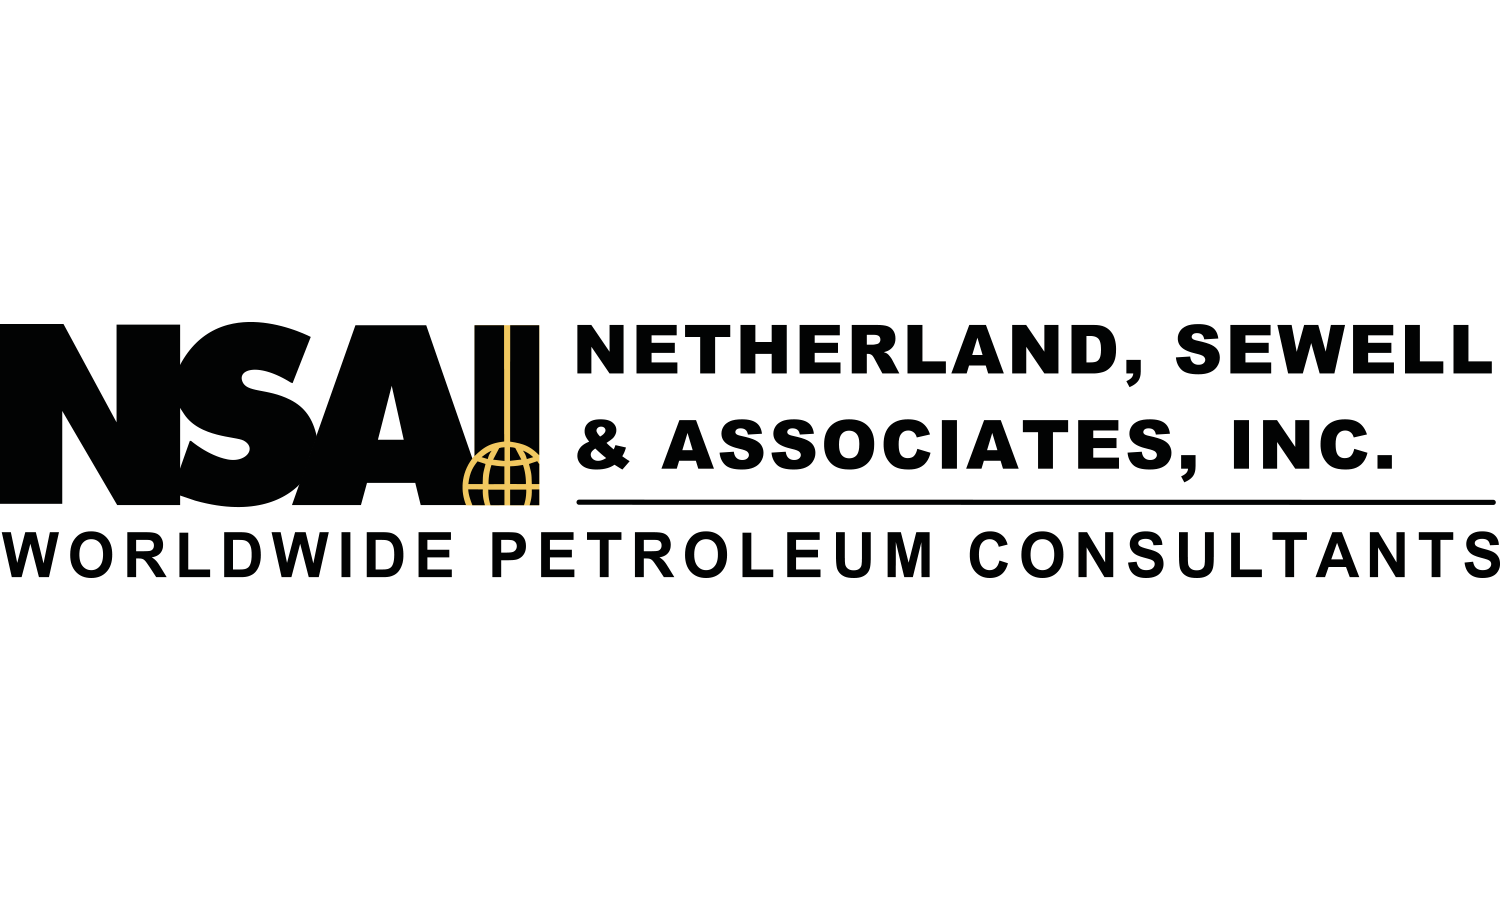 NSAI Netherland, Sewell & Associates, Inc. Worldwide Petroleum Consultants